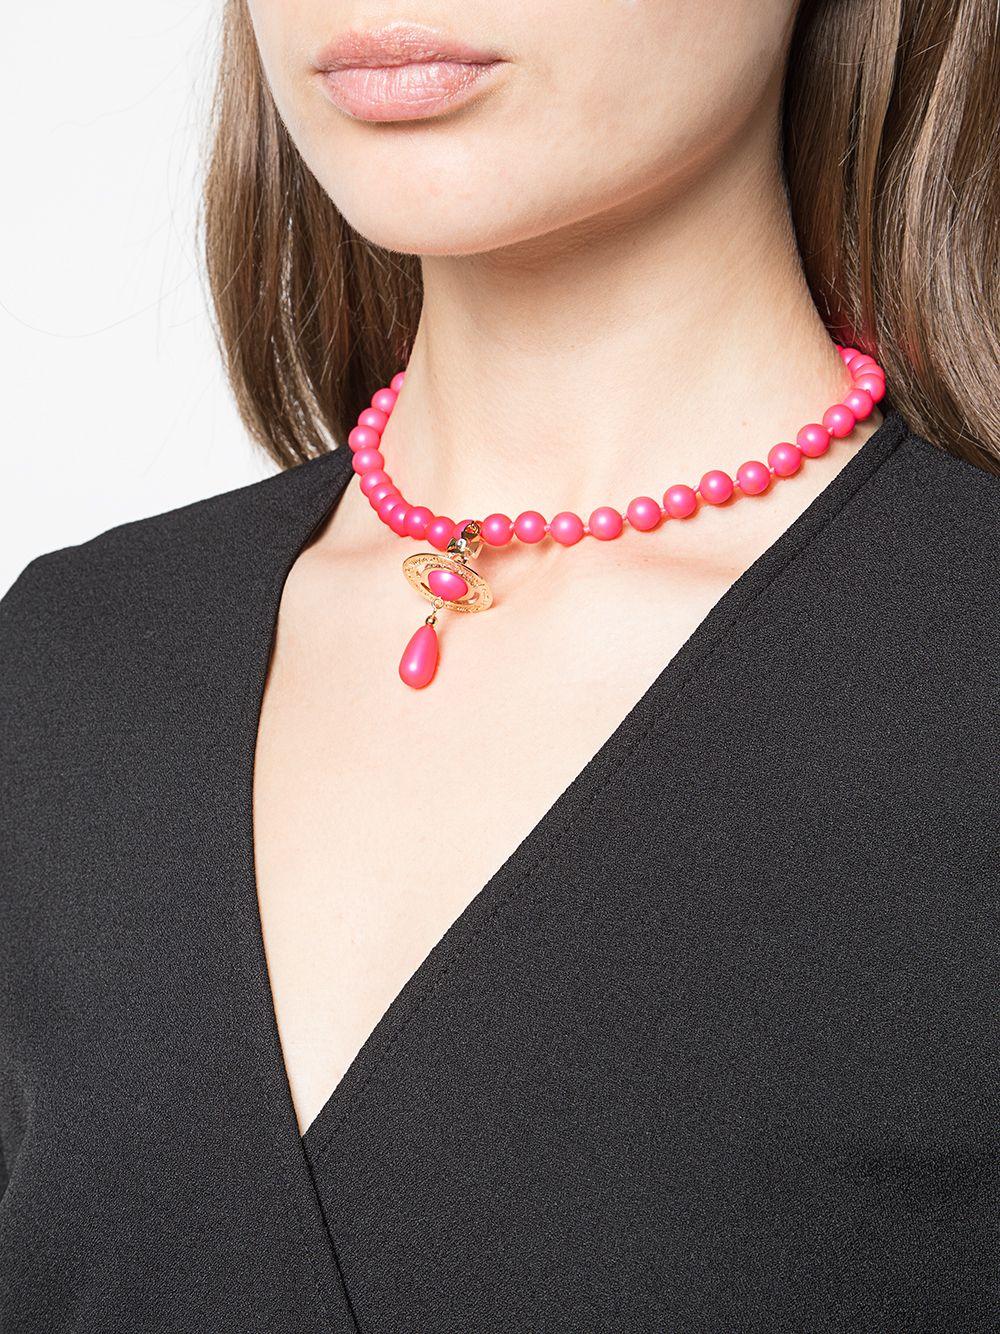 Vivienne Westwood Neon Pearl Choker Necklace in Pink - Lyst